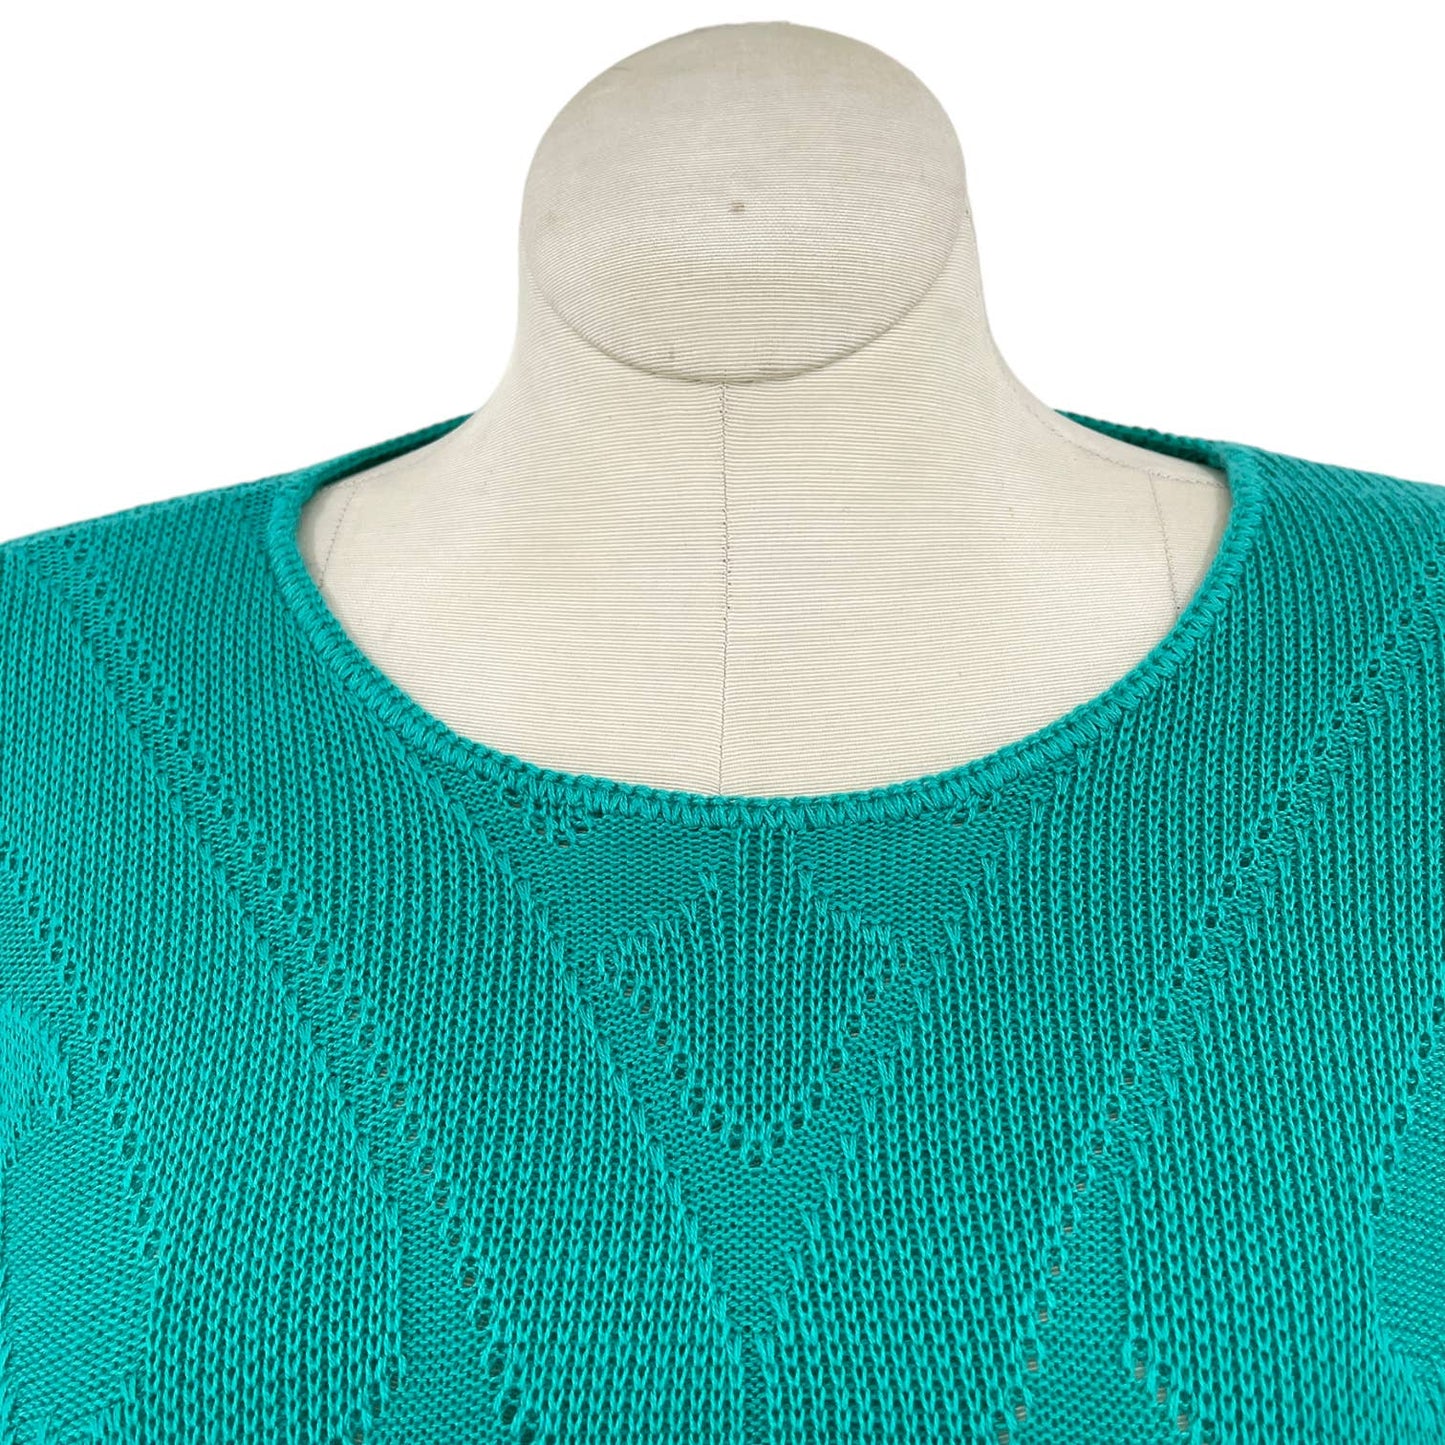 Vintage 80s Green Sweater Short Puff Sleeve Tonal Geometric Pattern Size M L